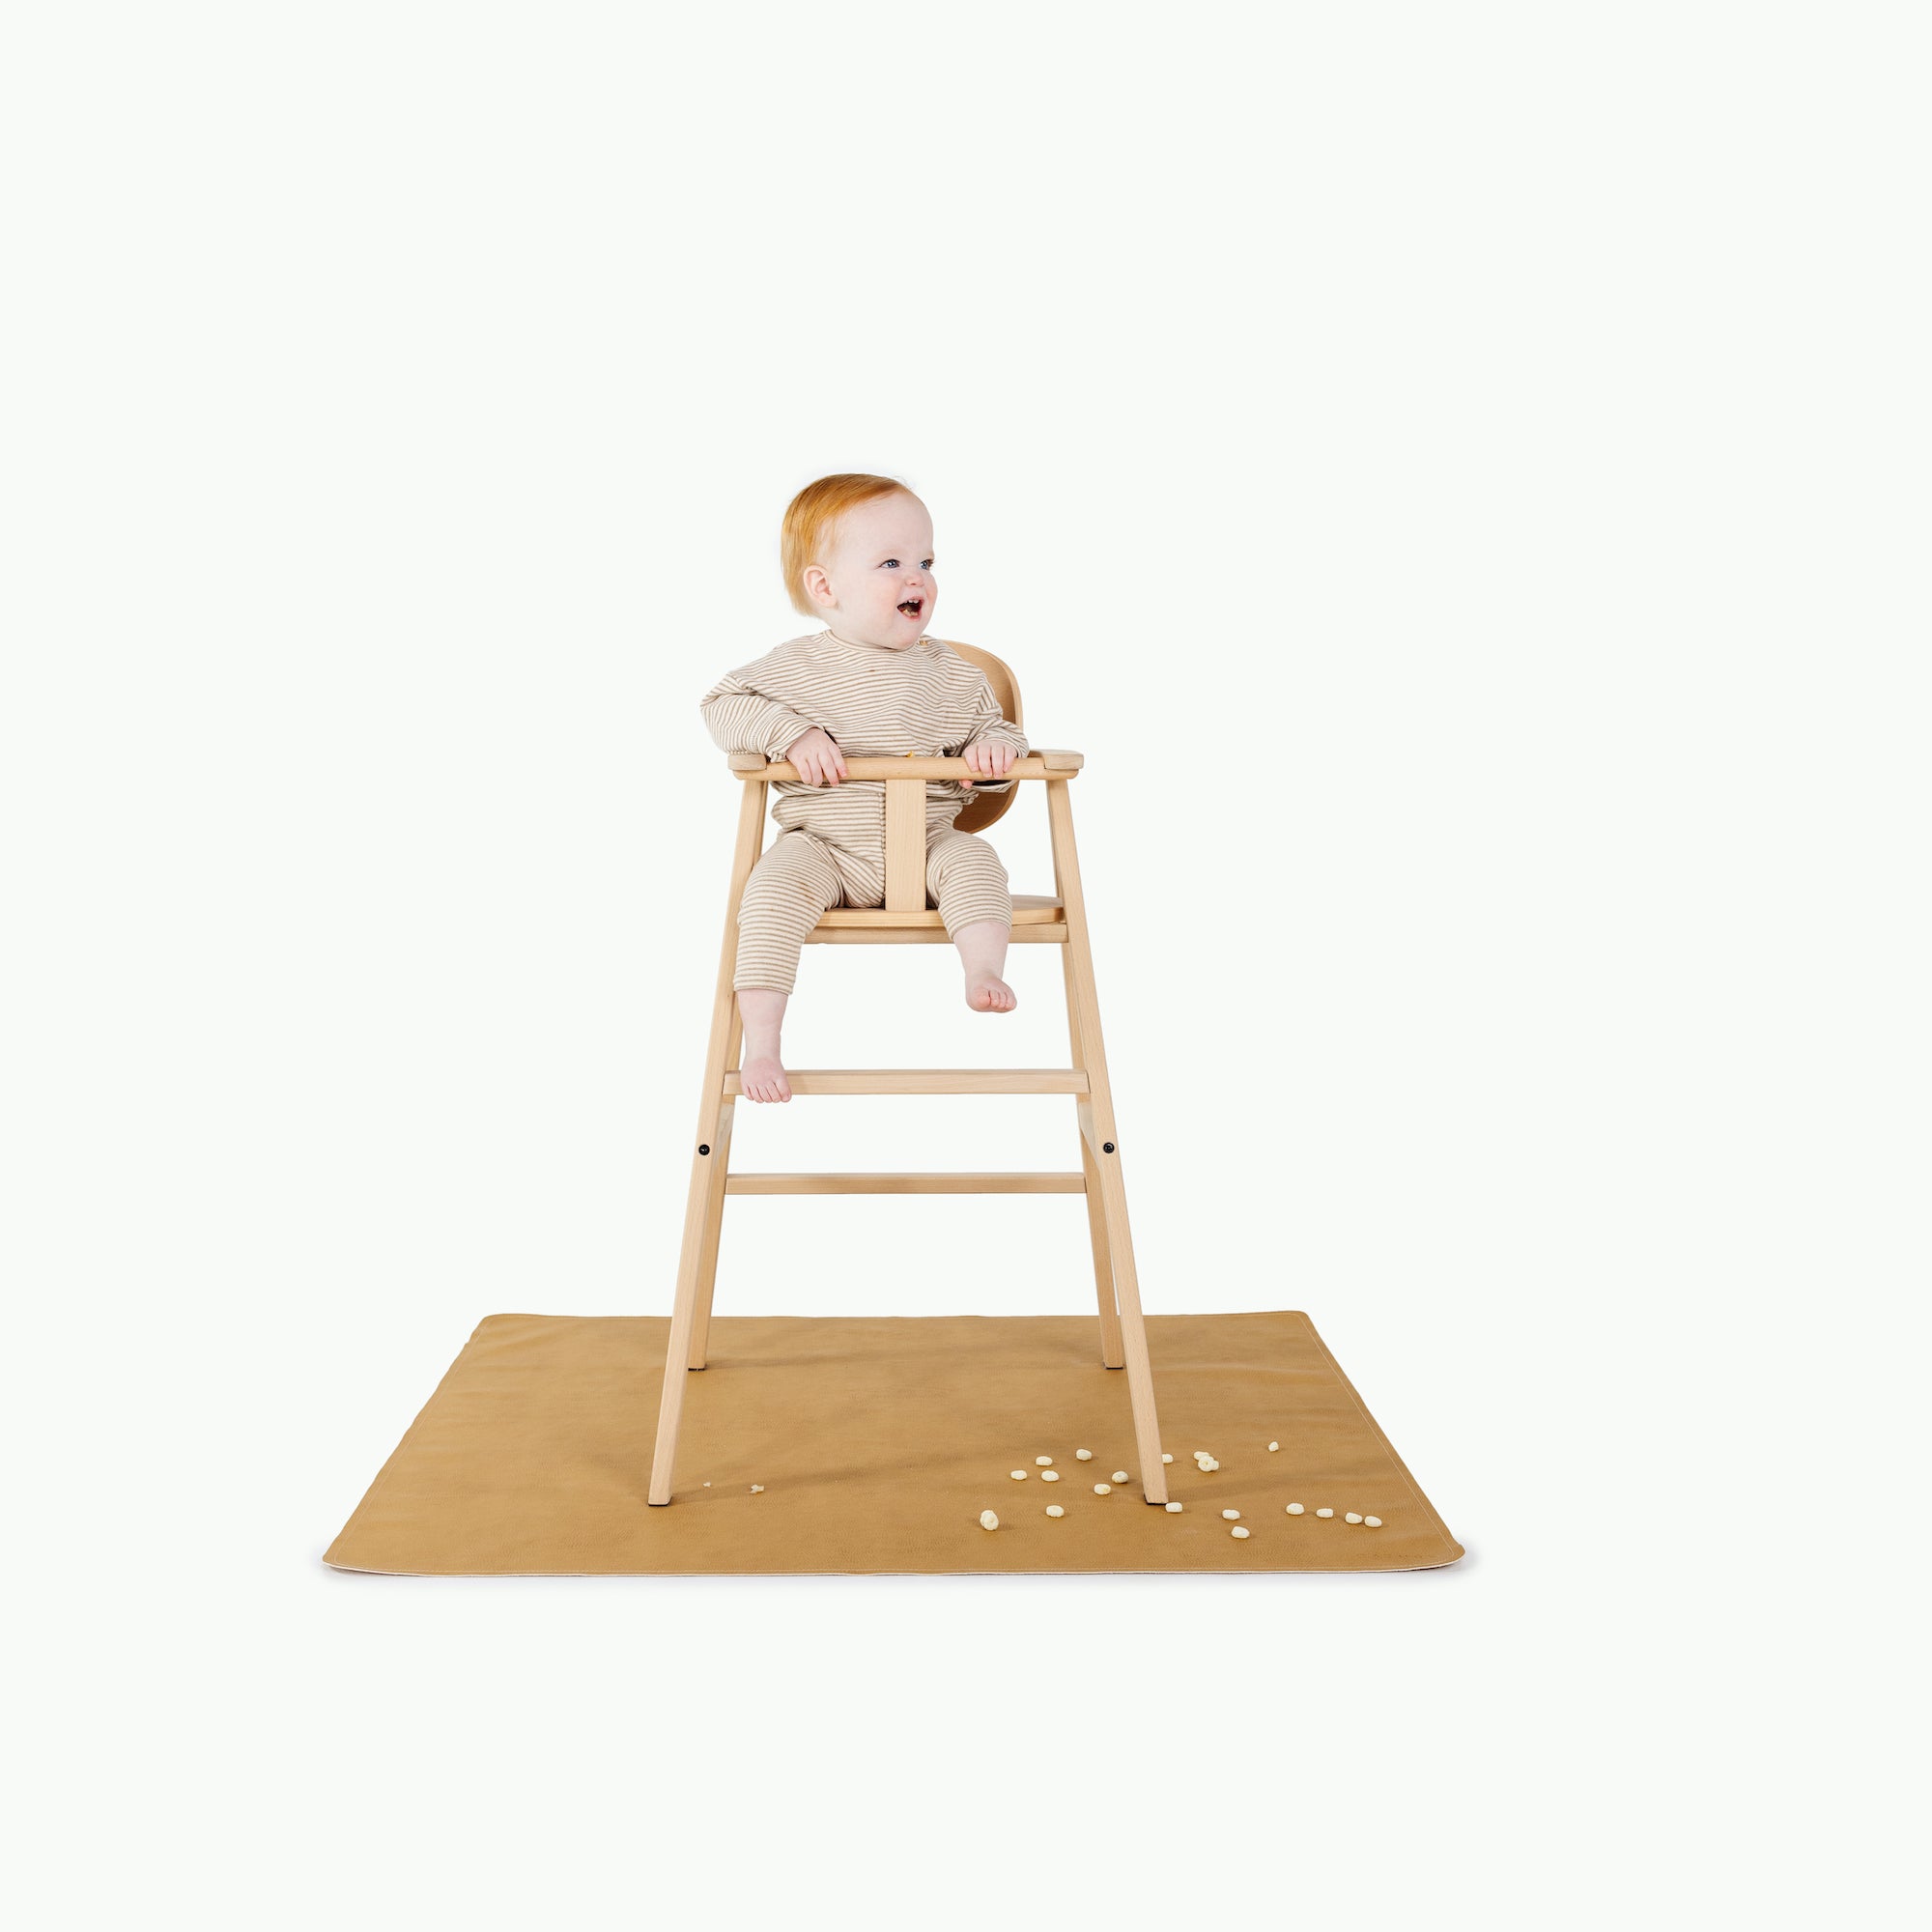 Tassel@baby in high chair on mat